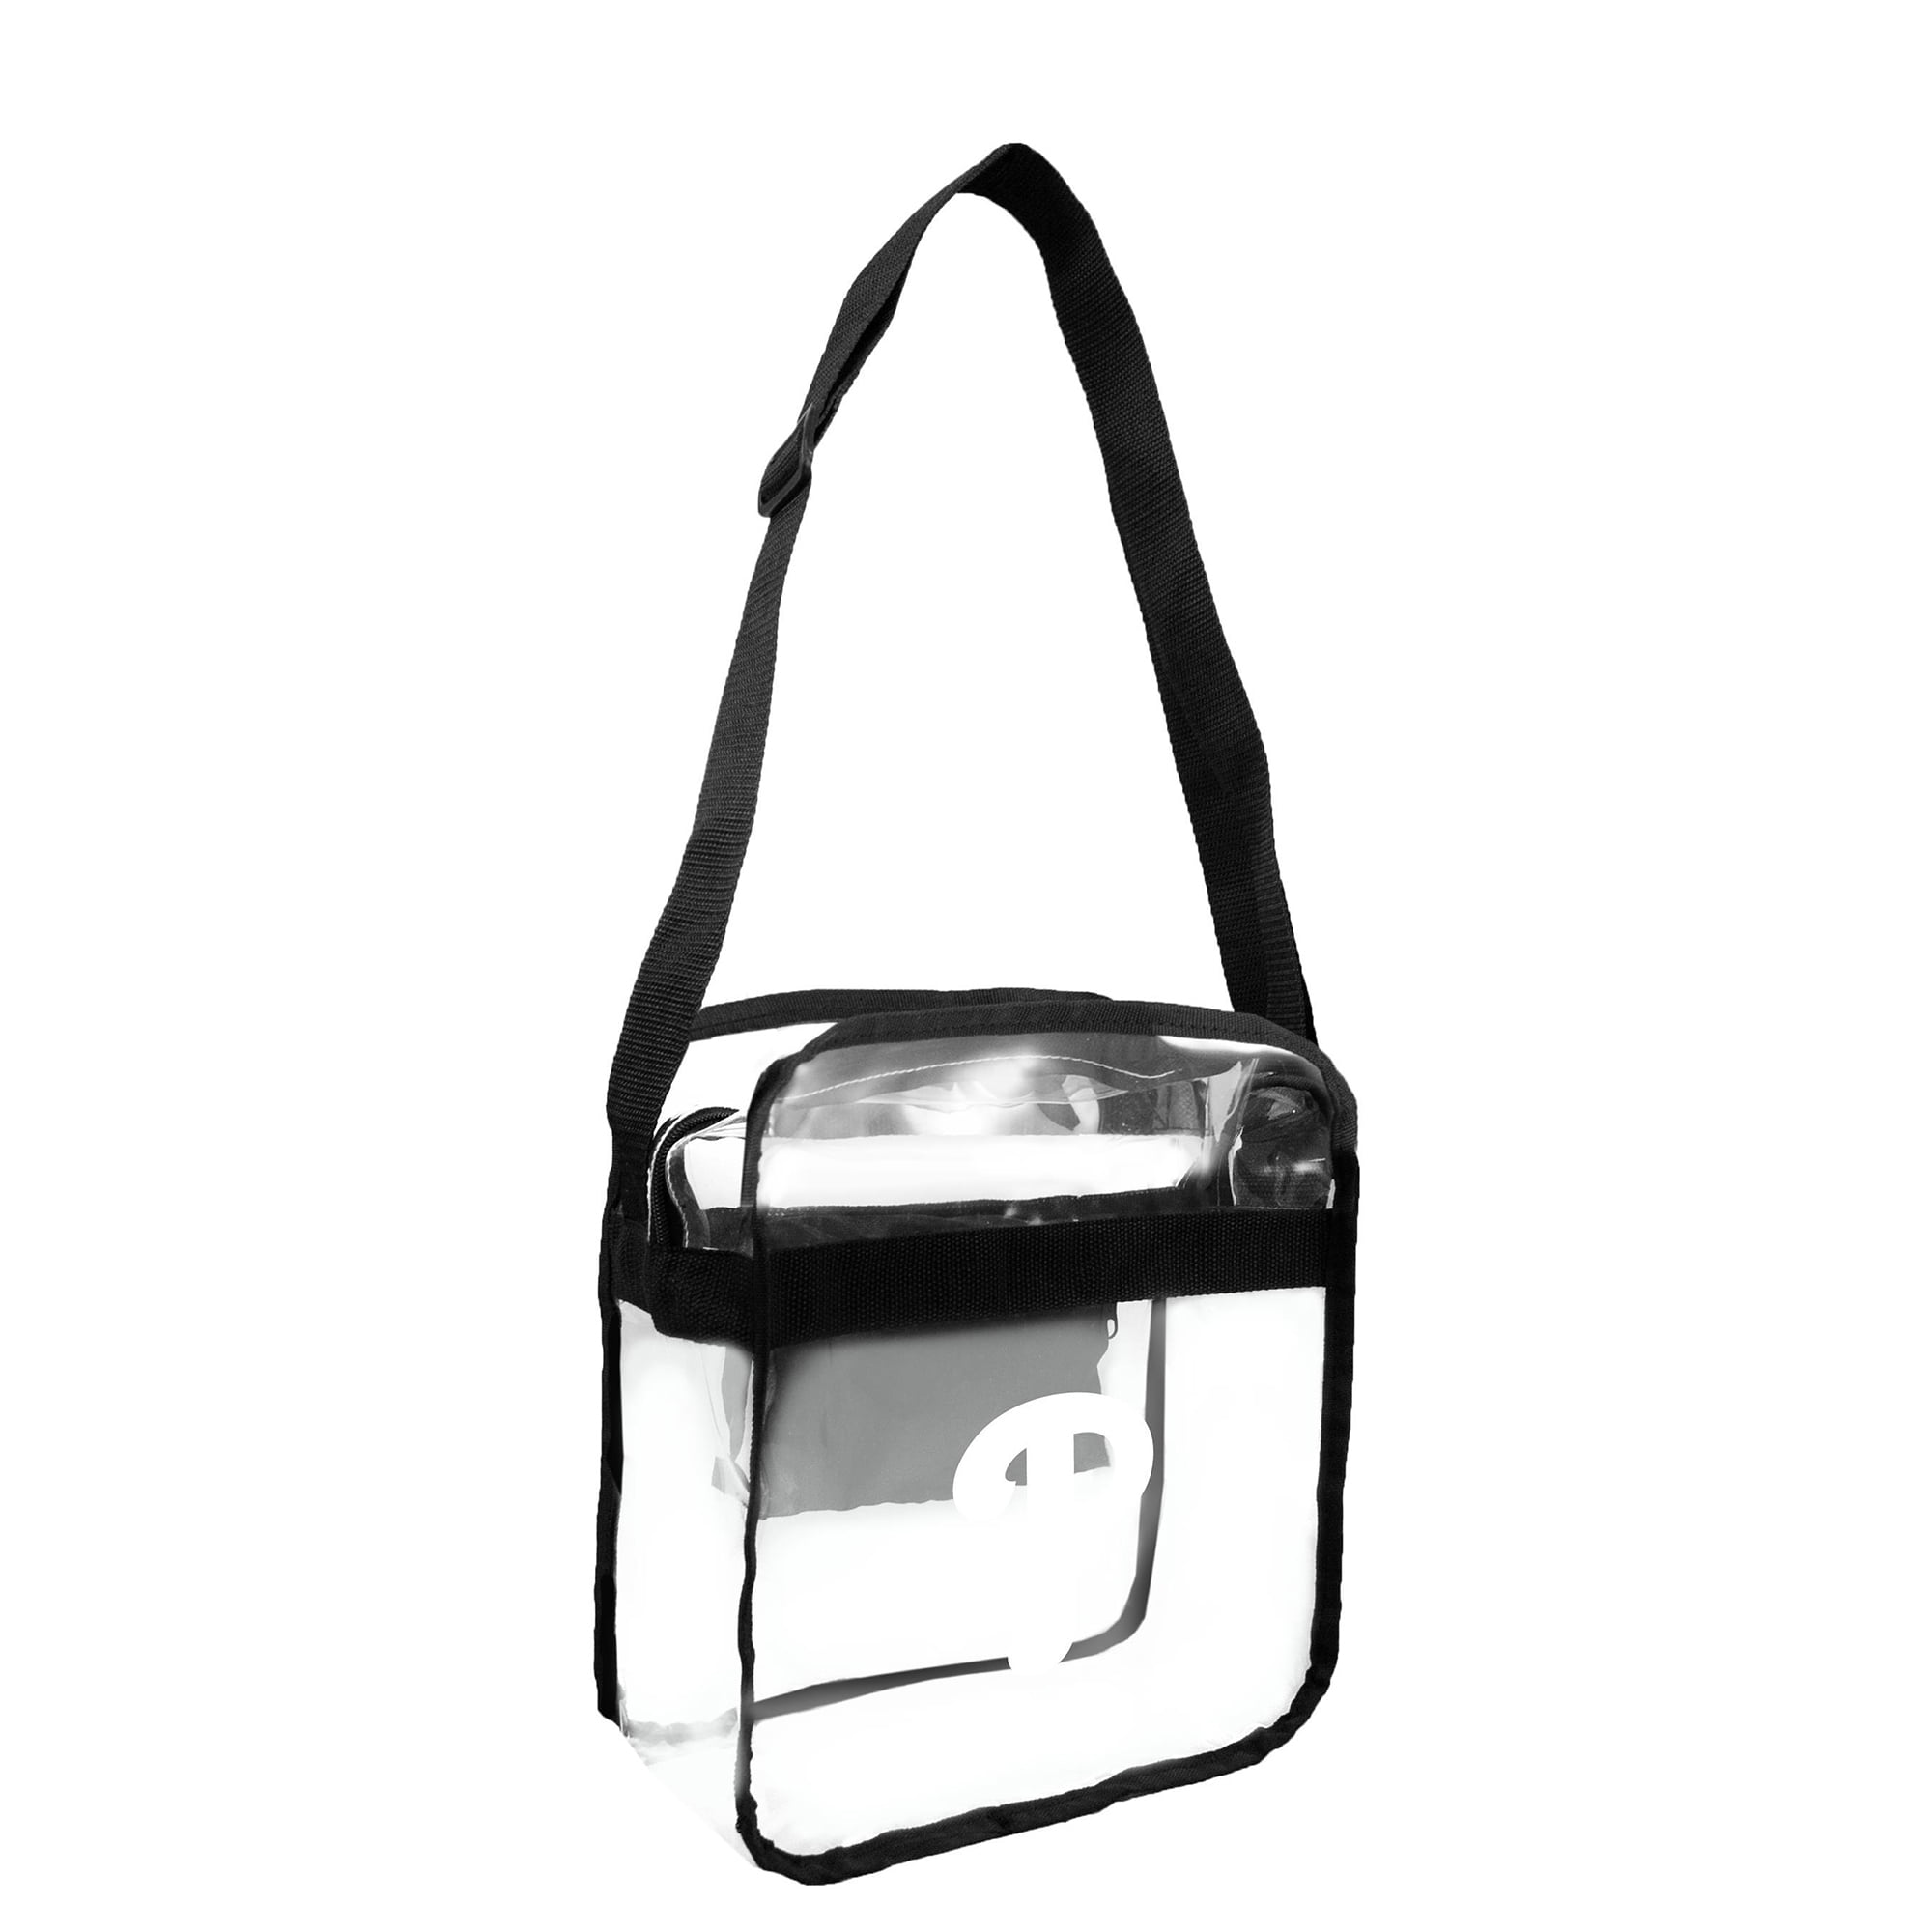 MLB Tote bag for women with zipper retro sports shoulder bag